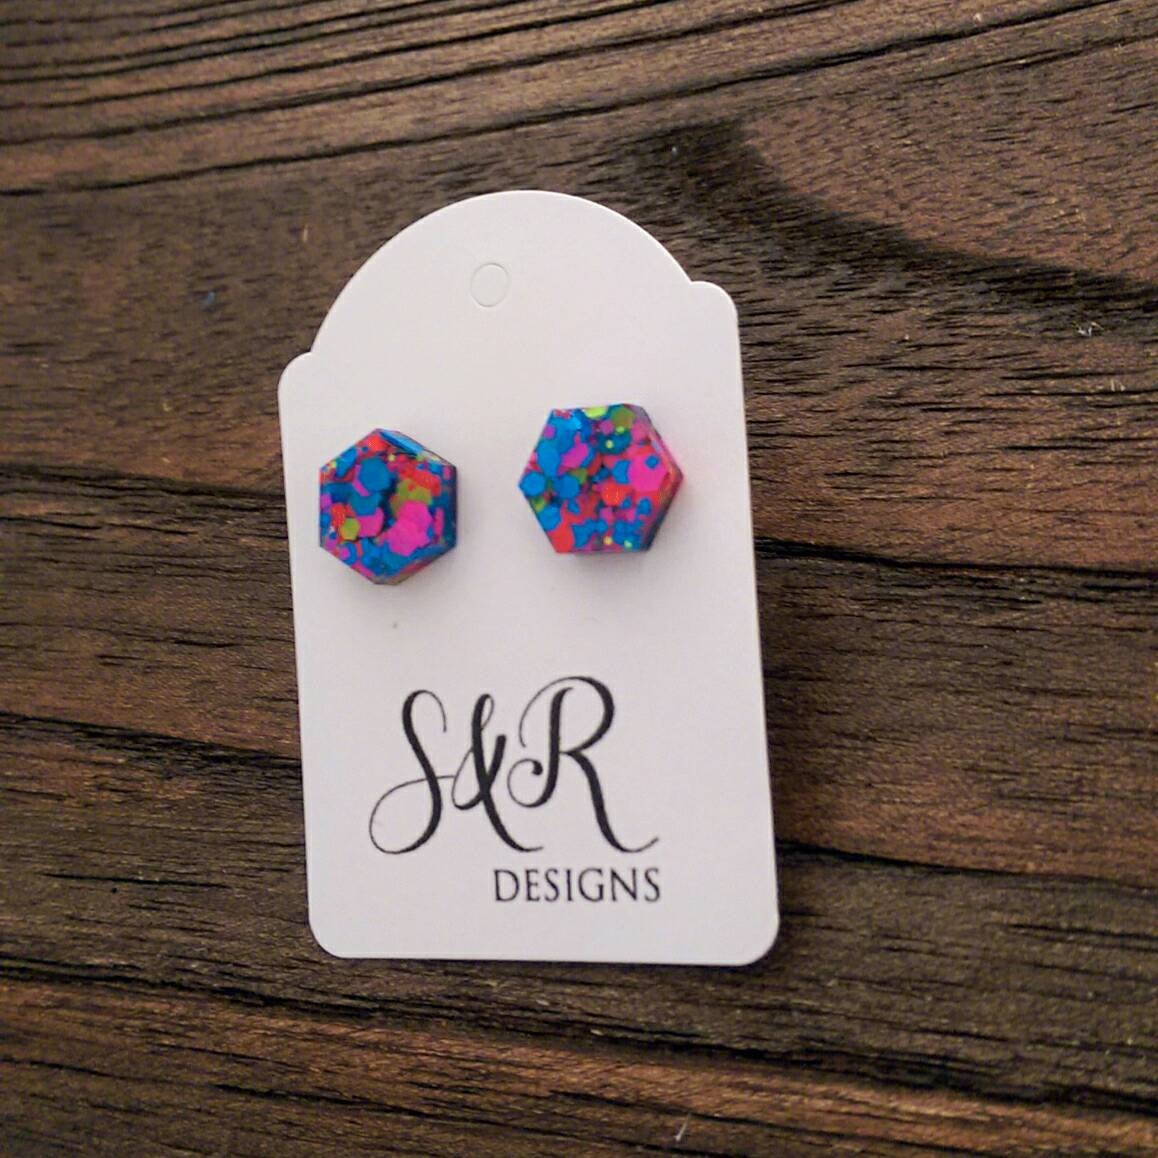 Hexagon Resin Stud Earrings, Neon Pink Blue Orange Yellow Glitter Earrings. Stainless Steel Stud Earrings. 10mm or 6mm